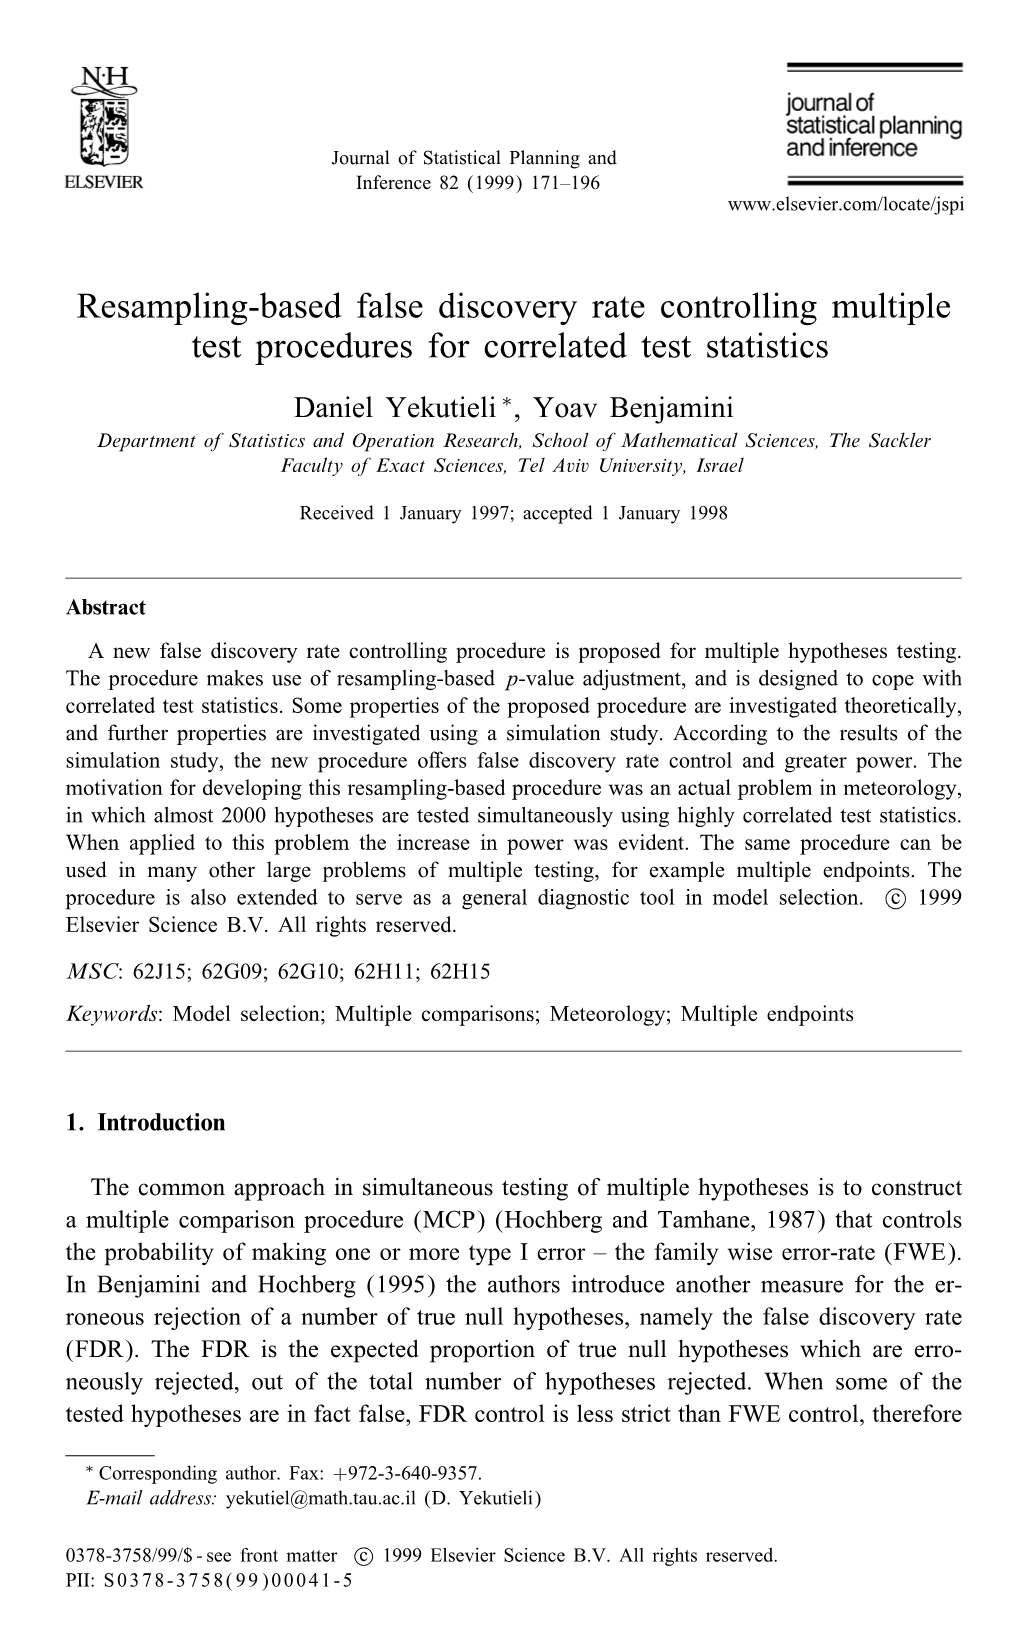 Resampling-Based False Discovery Rate Controlling Multiple Test Procedures for Correlated Test Statistics